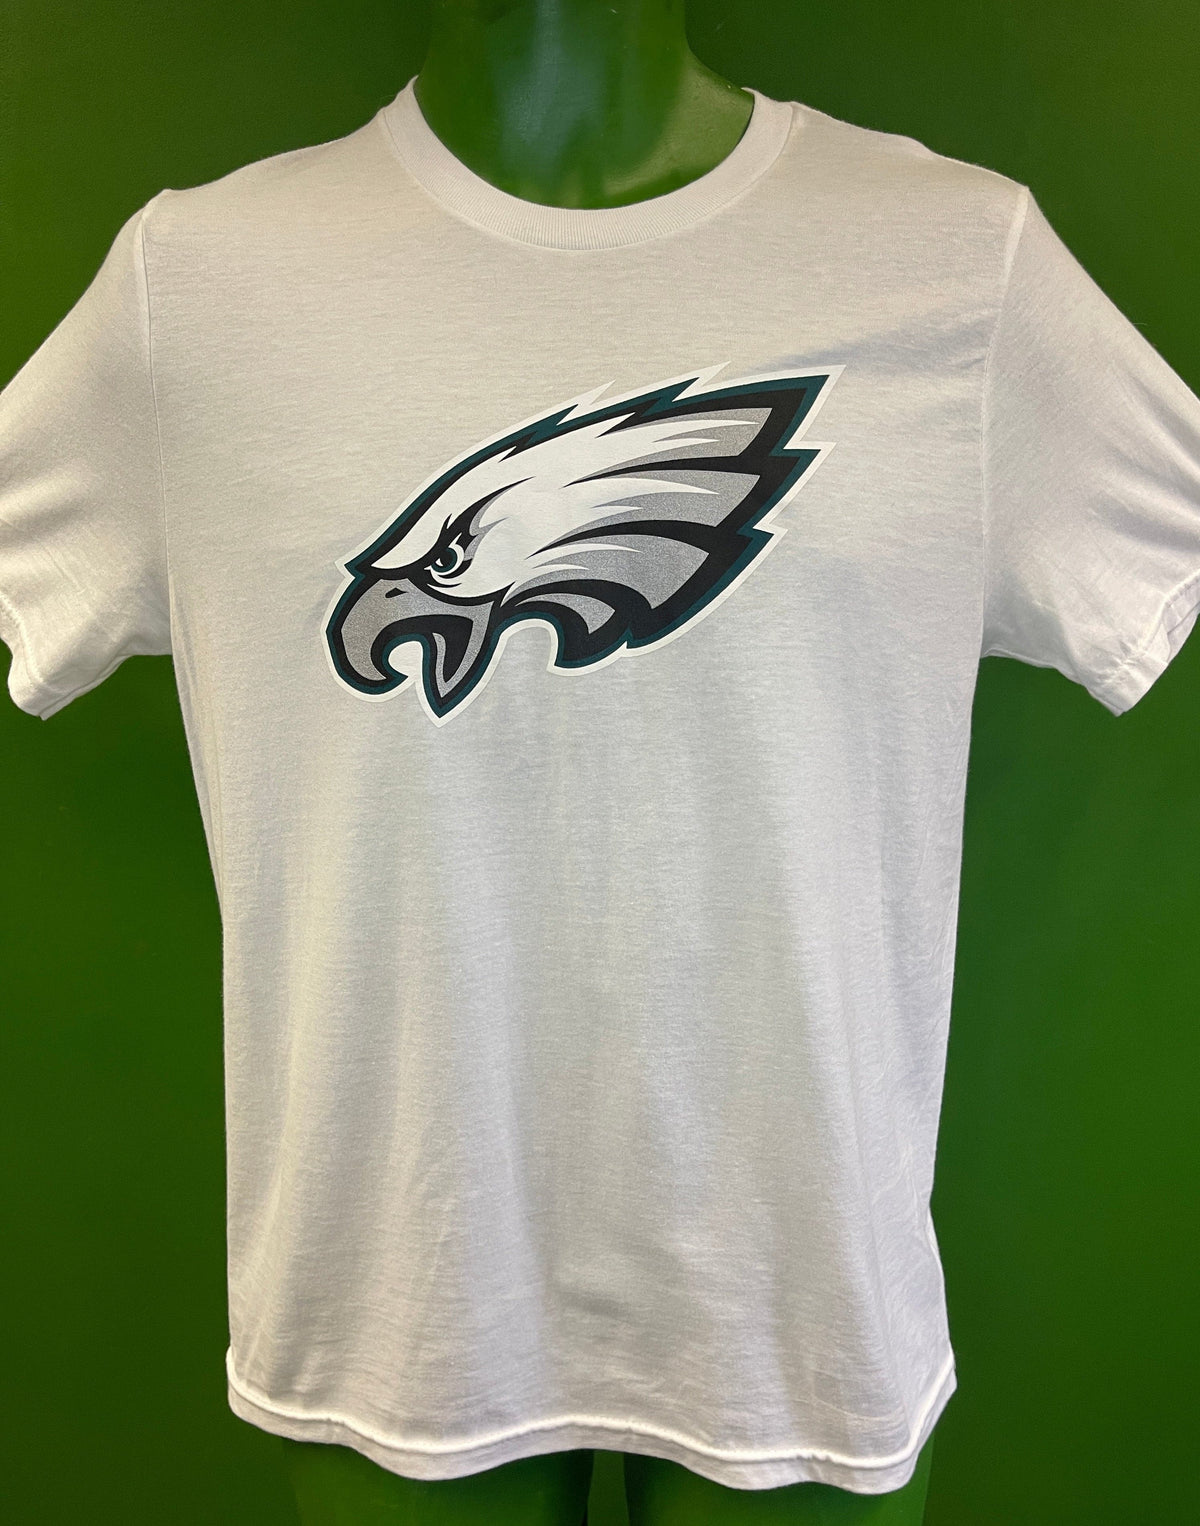 NFL Philadelphia Eagles White Sparkly Girls' T-Shirt Youth Large 14-16